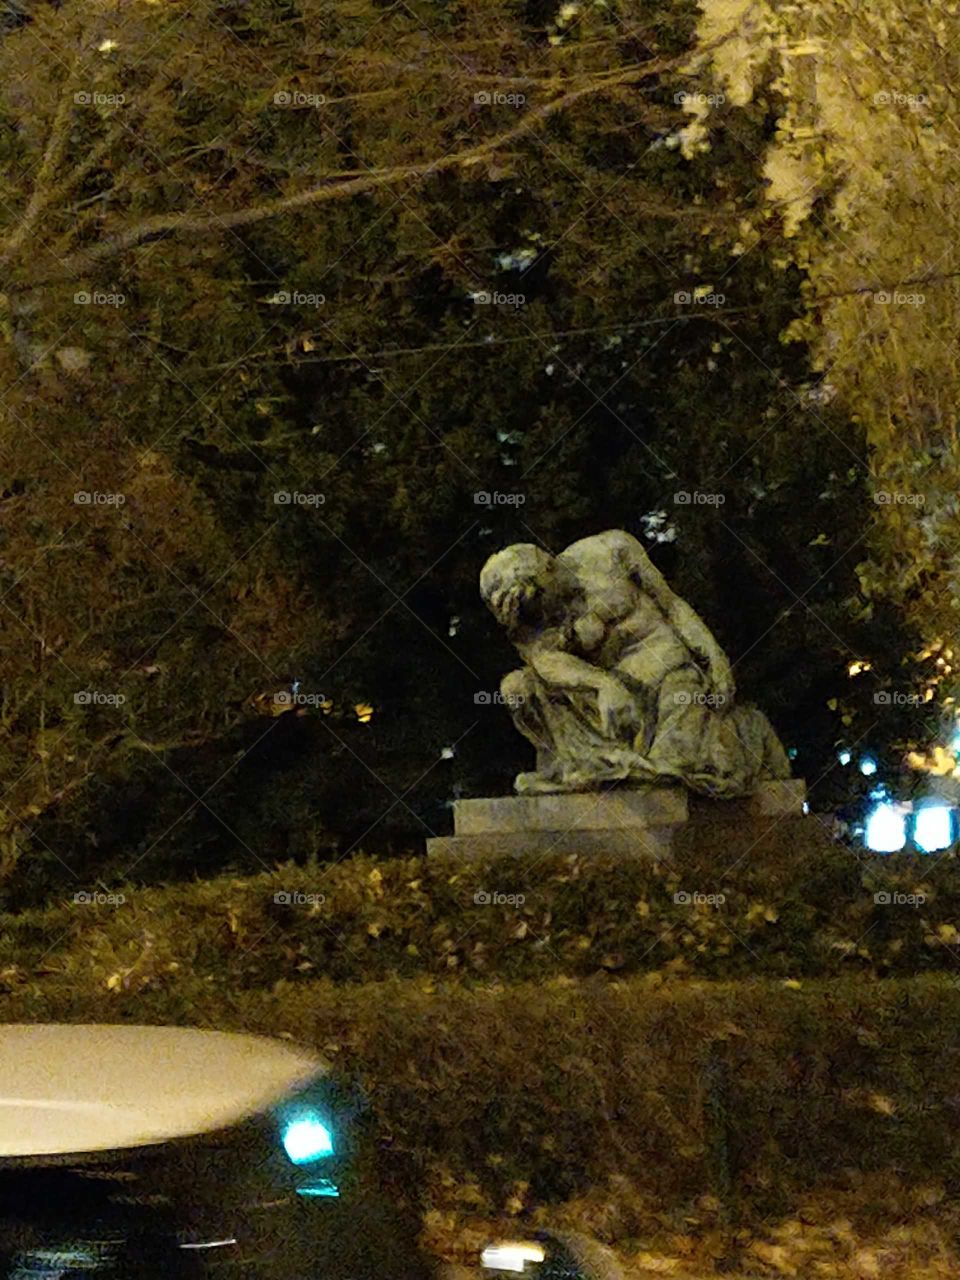 Prague Statue